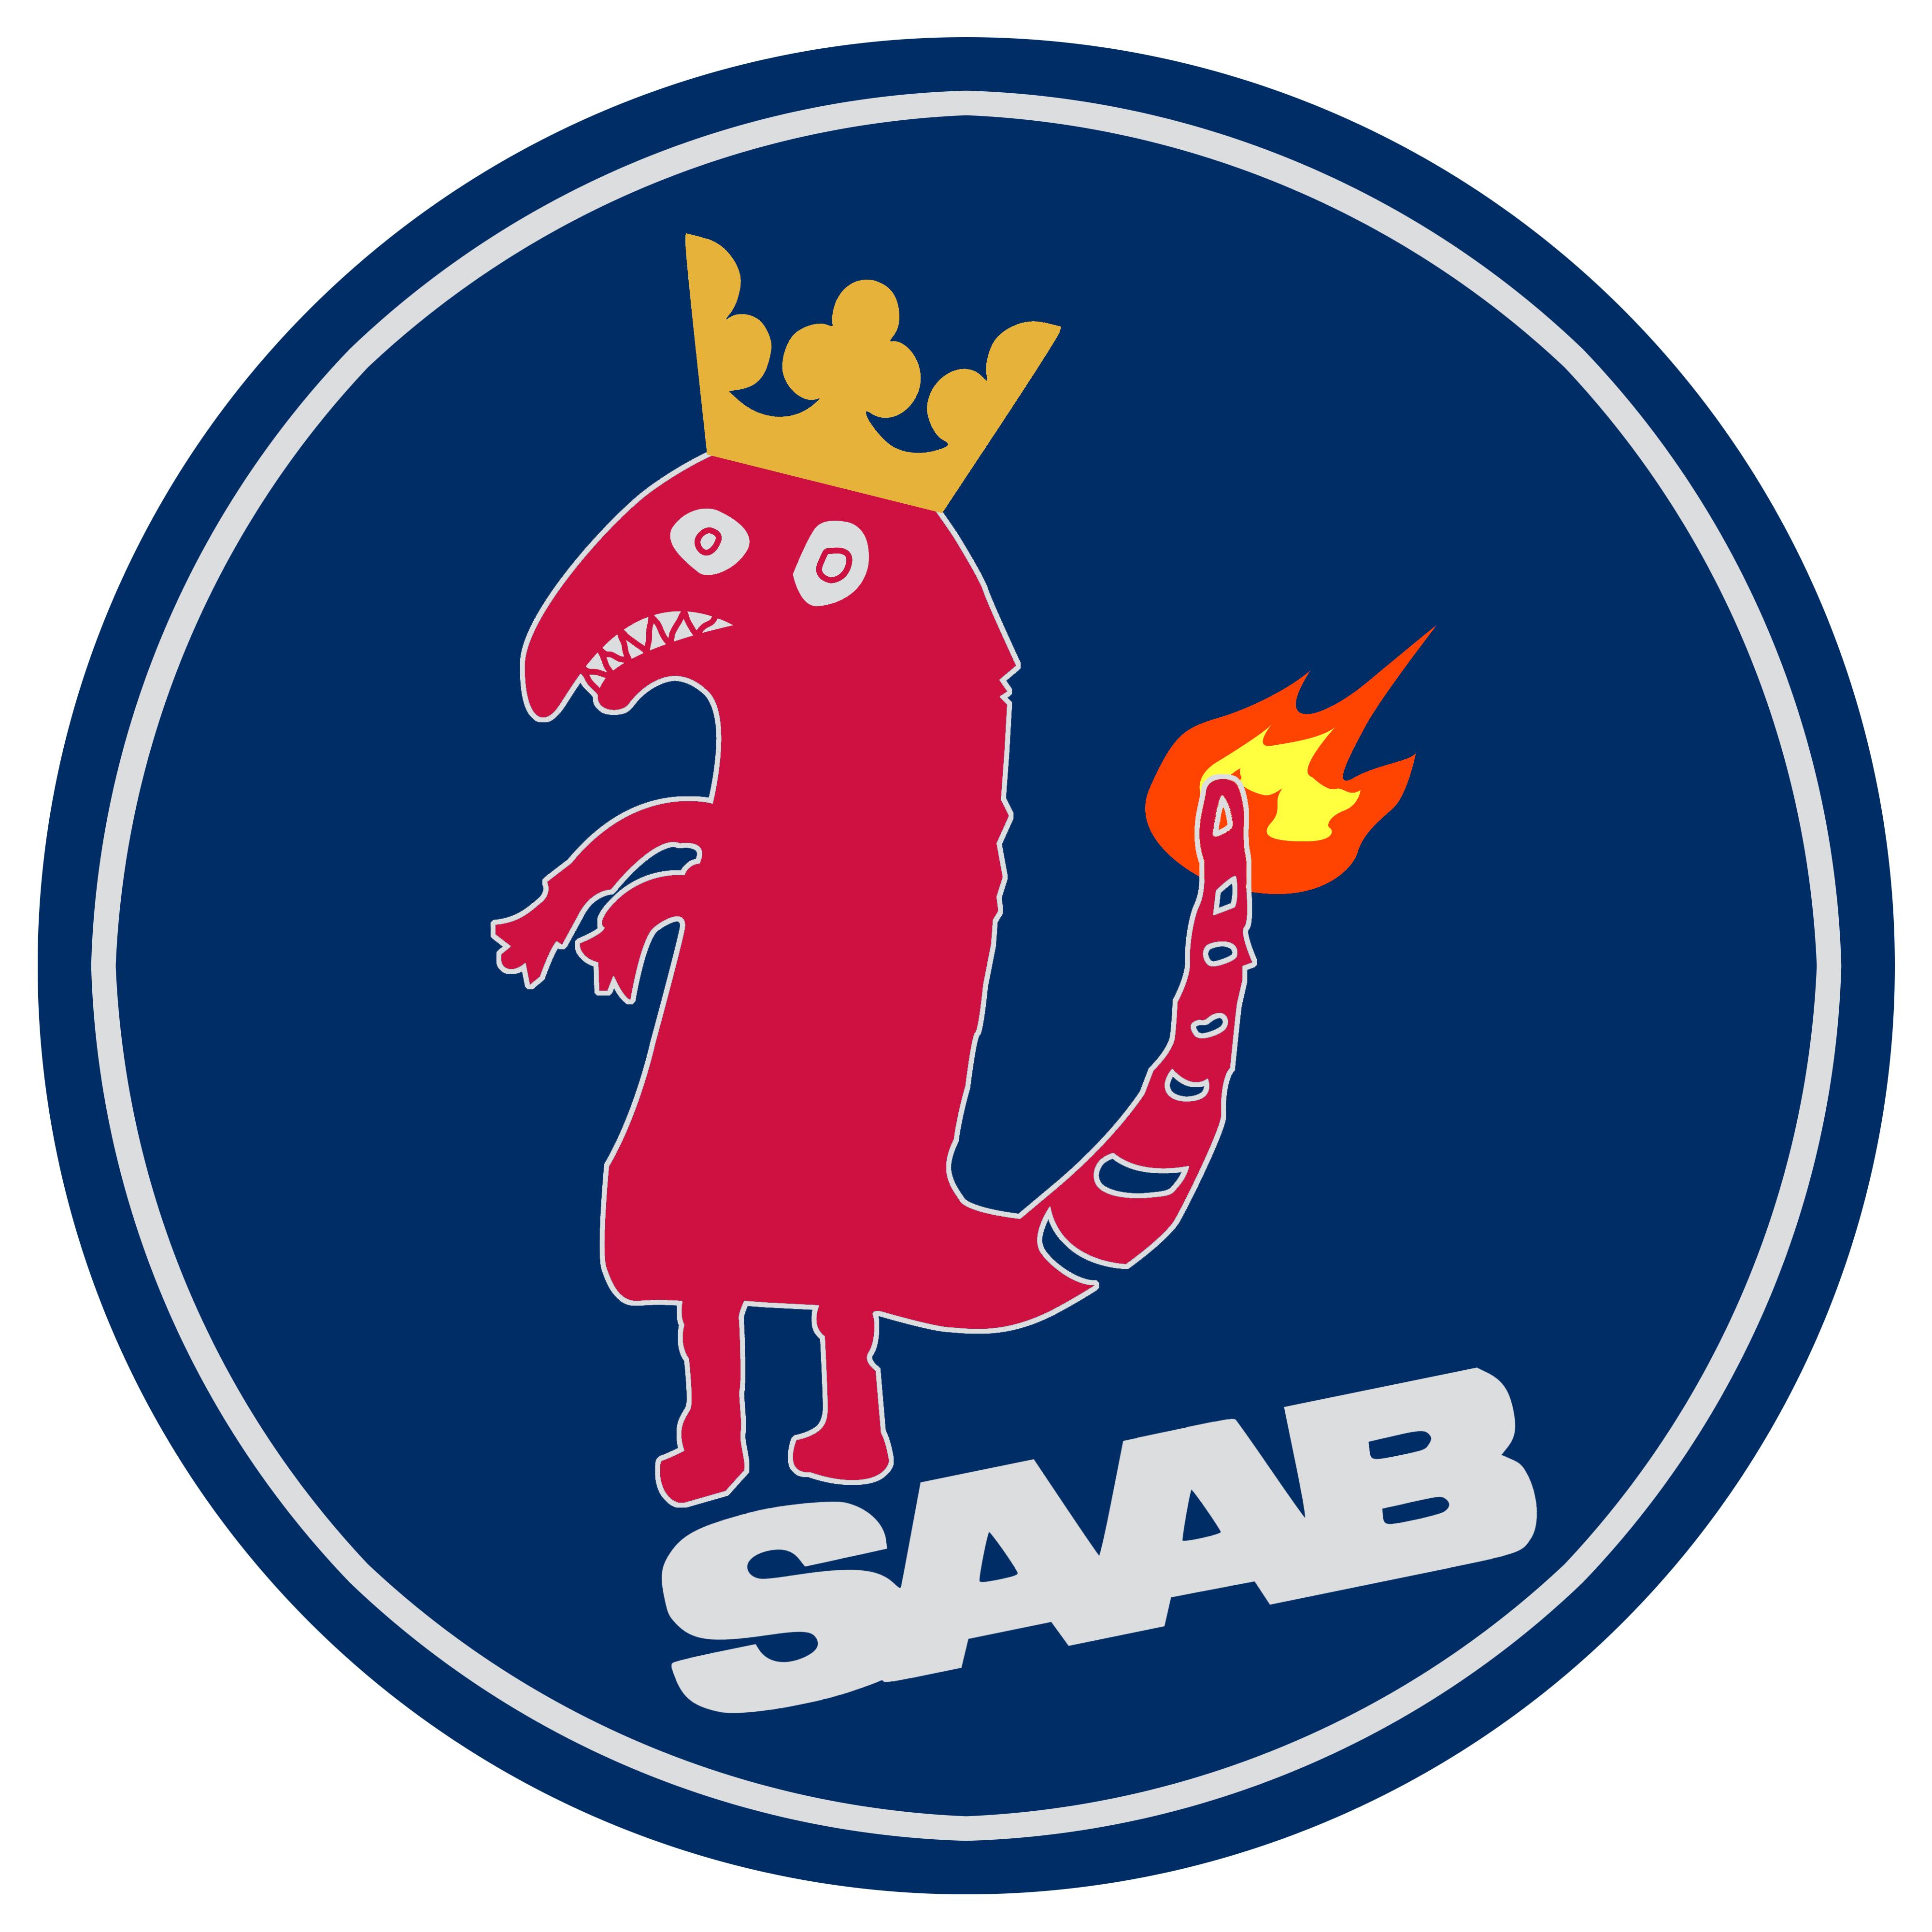 Saab Logo - I turned Shitty Charmander into a Saab logo. : saab